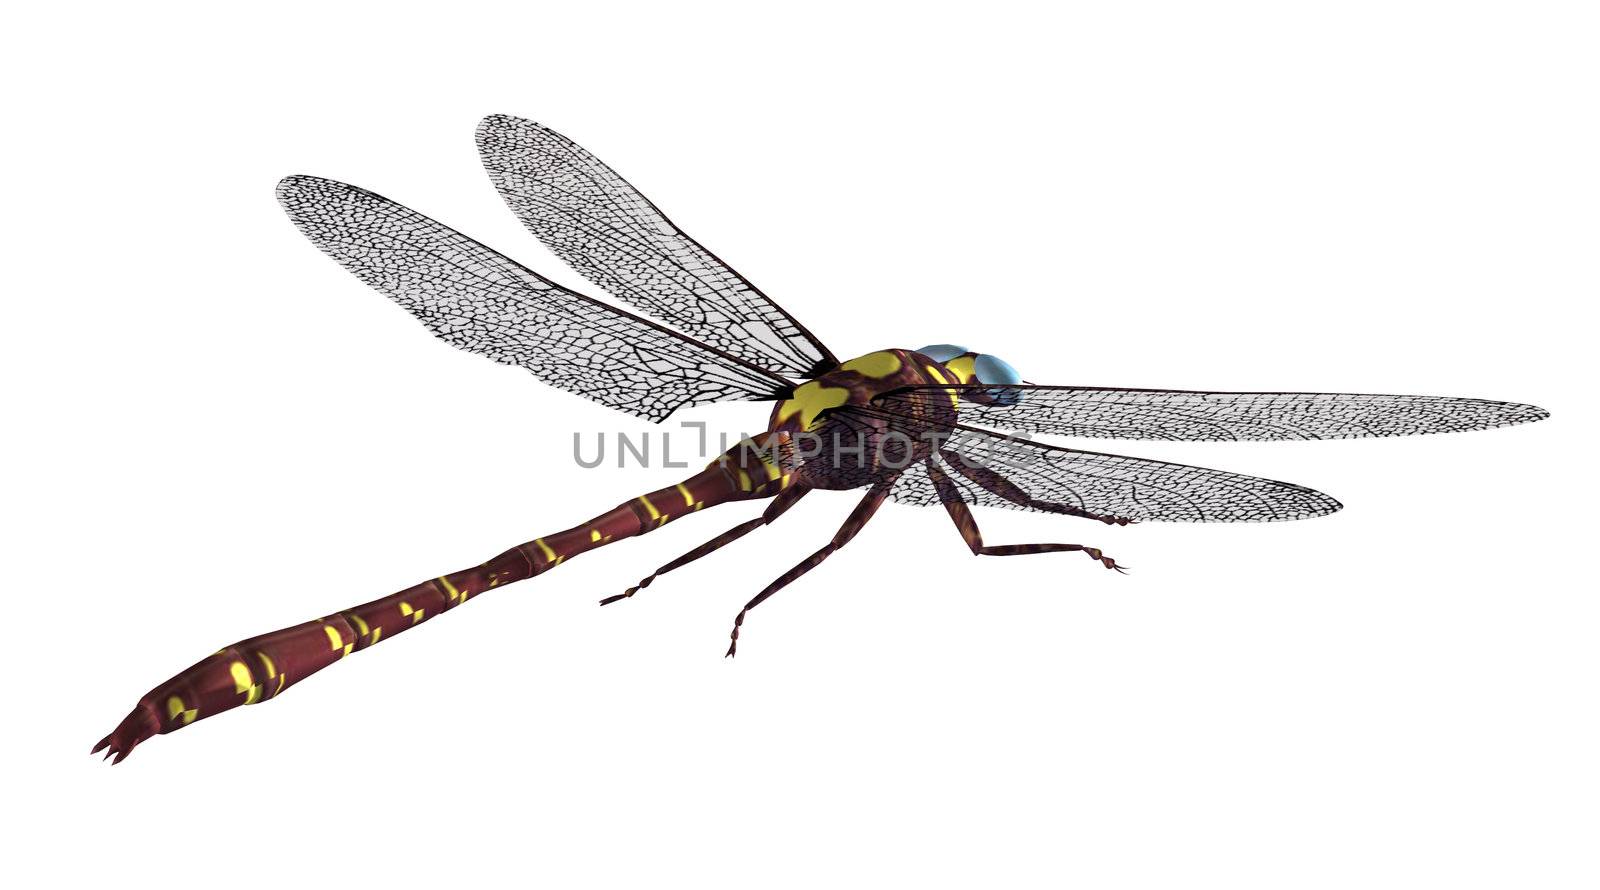 Dragonfly by kathygold